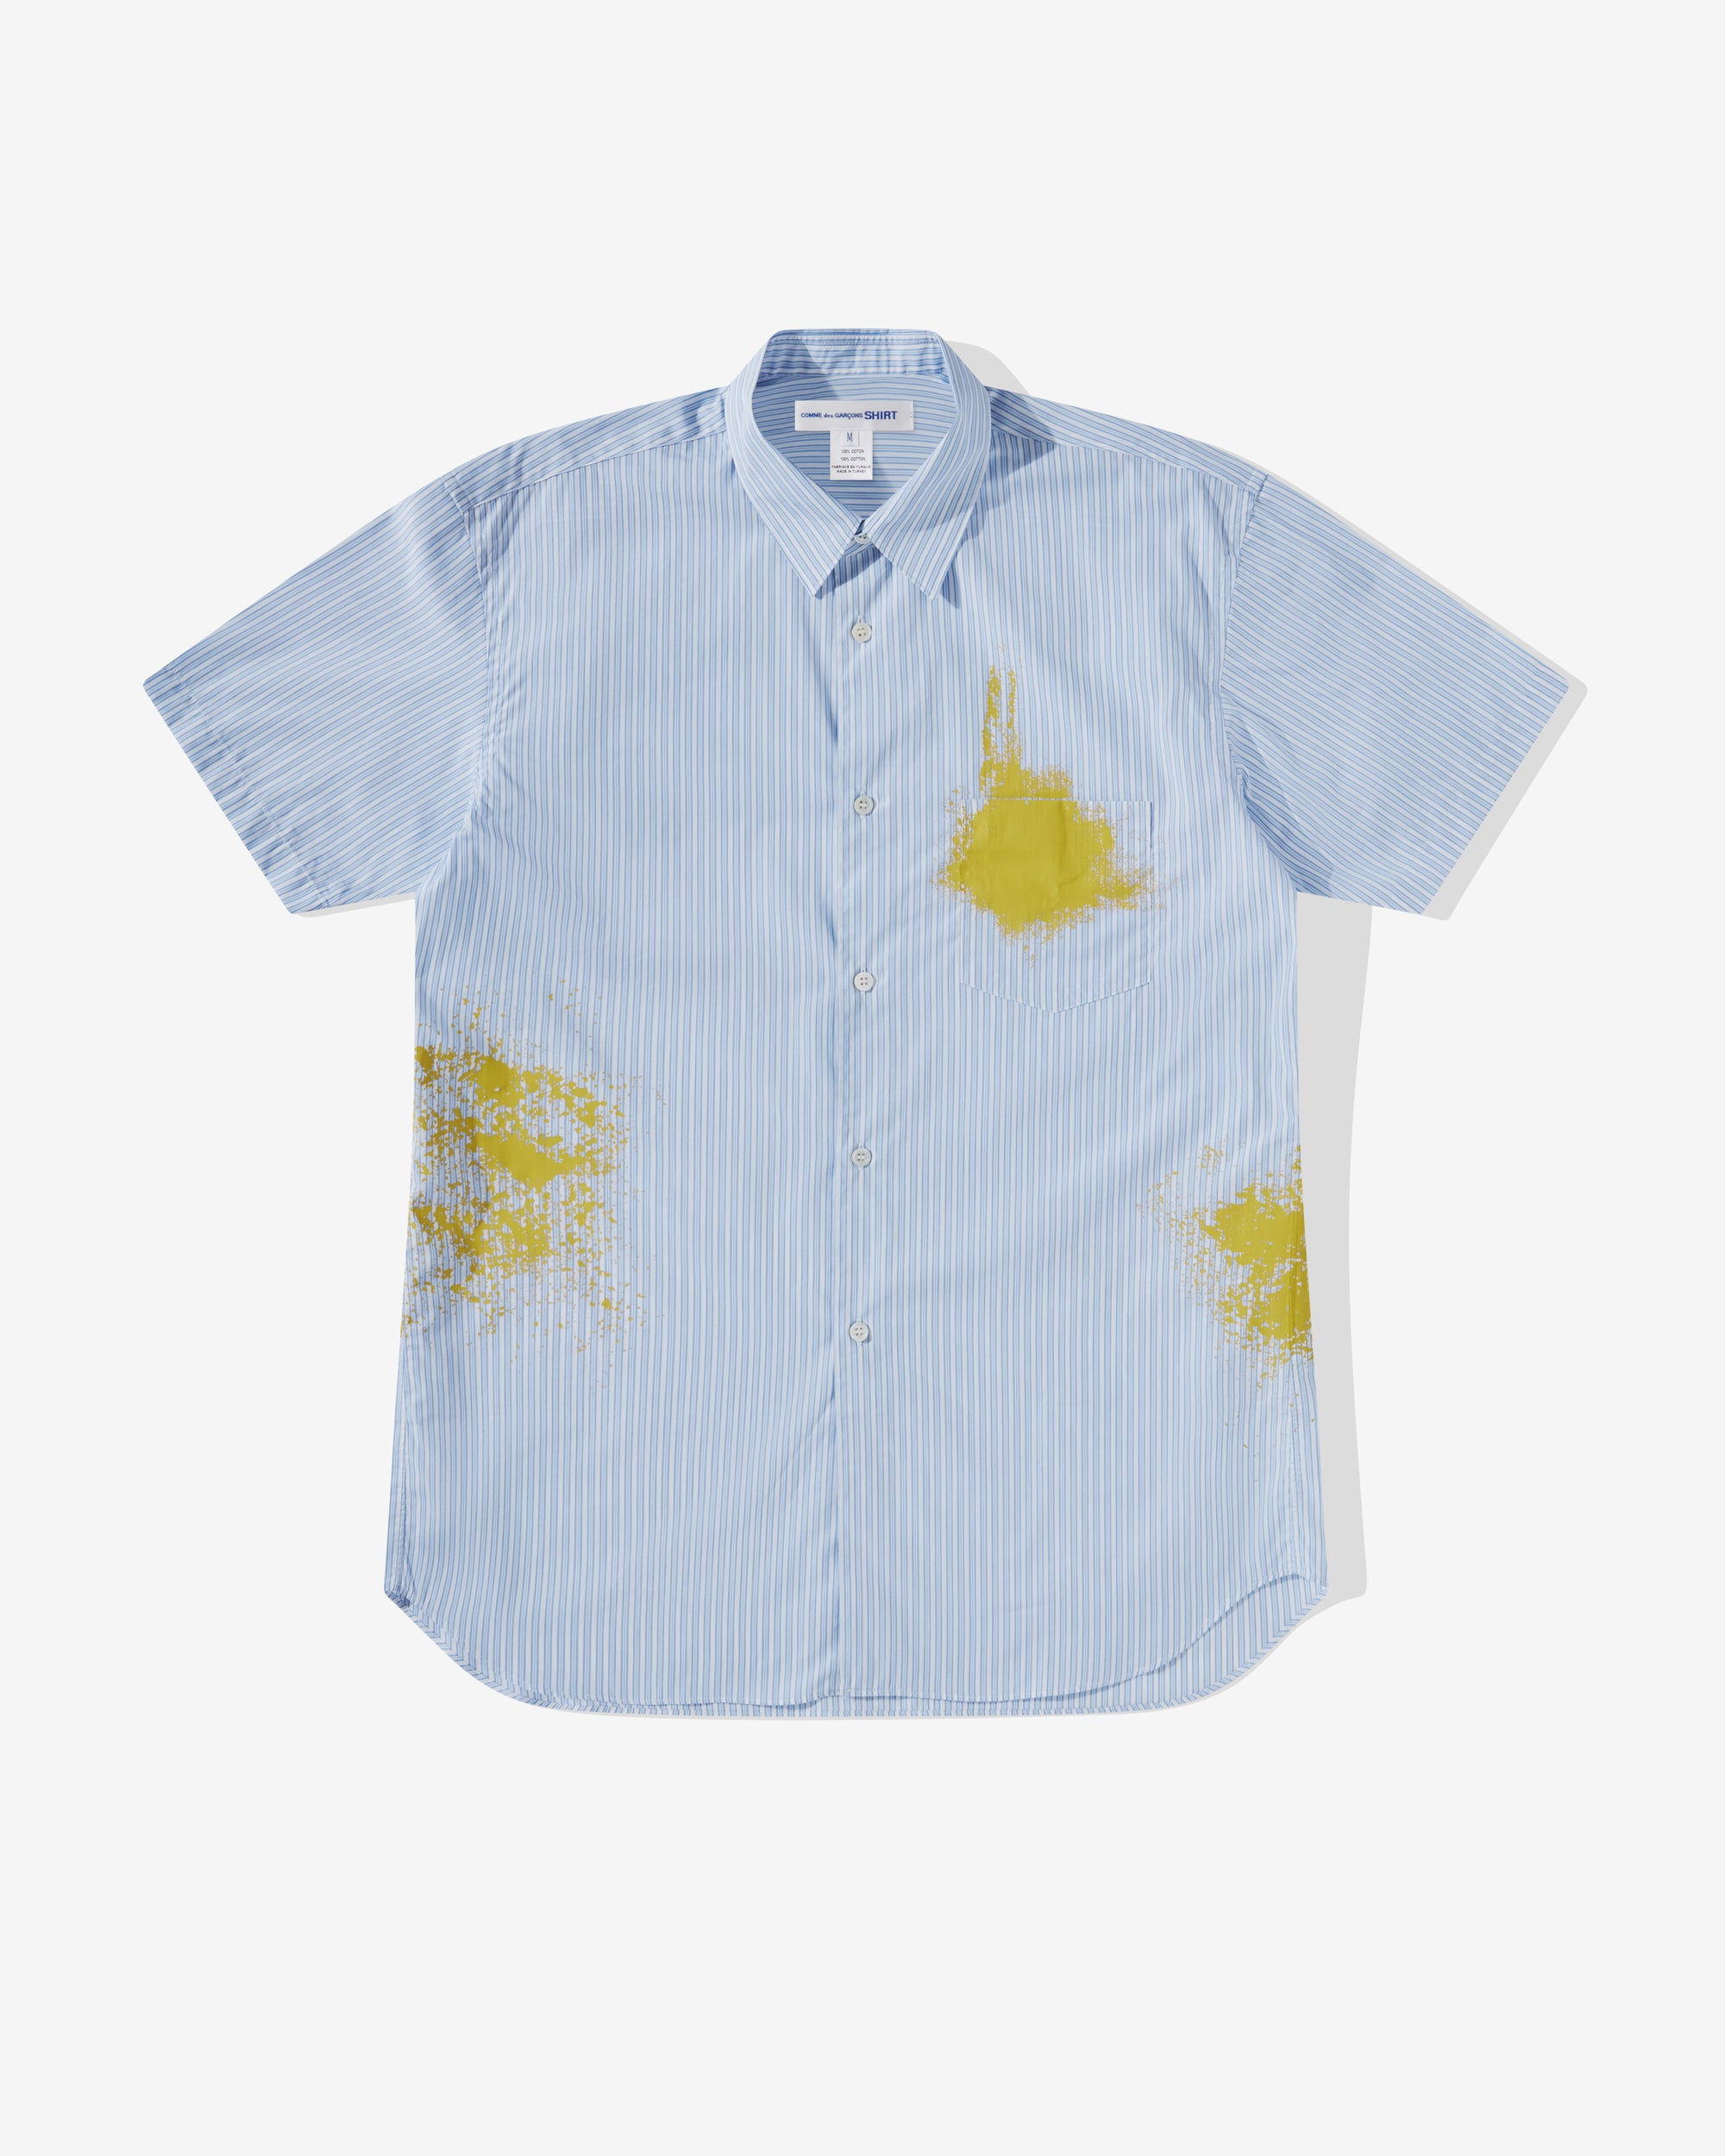 CDG Shirt - Men's Cotton Poplin Garment Printed Short Sleeve Shirt - (Stripe) view 1